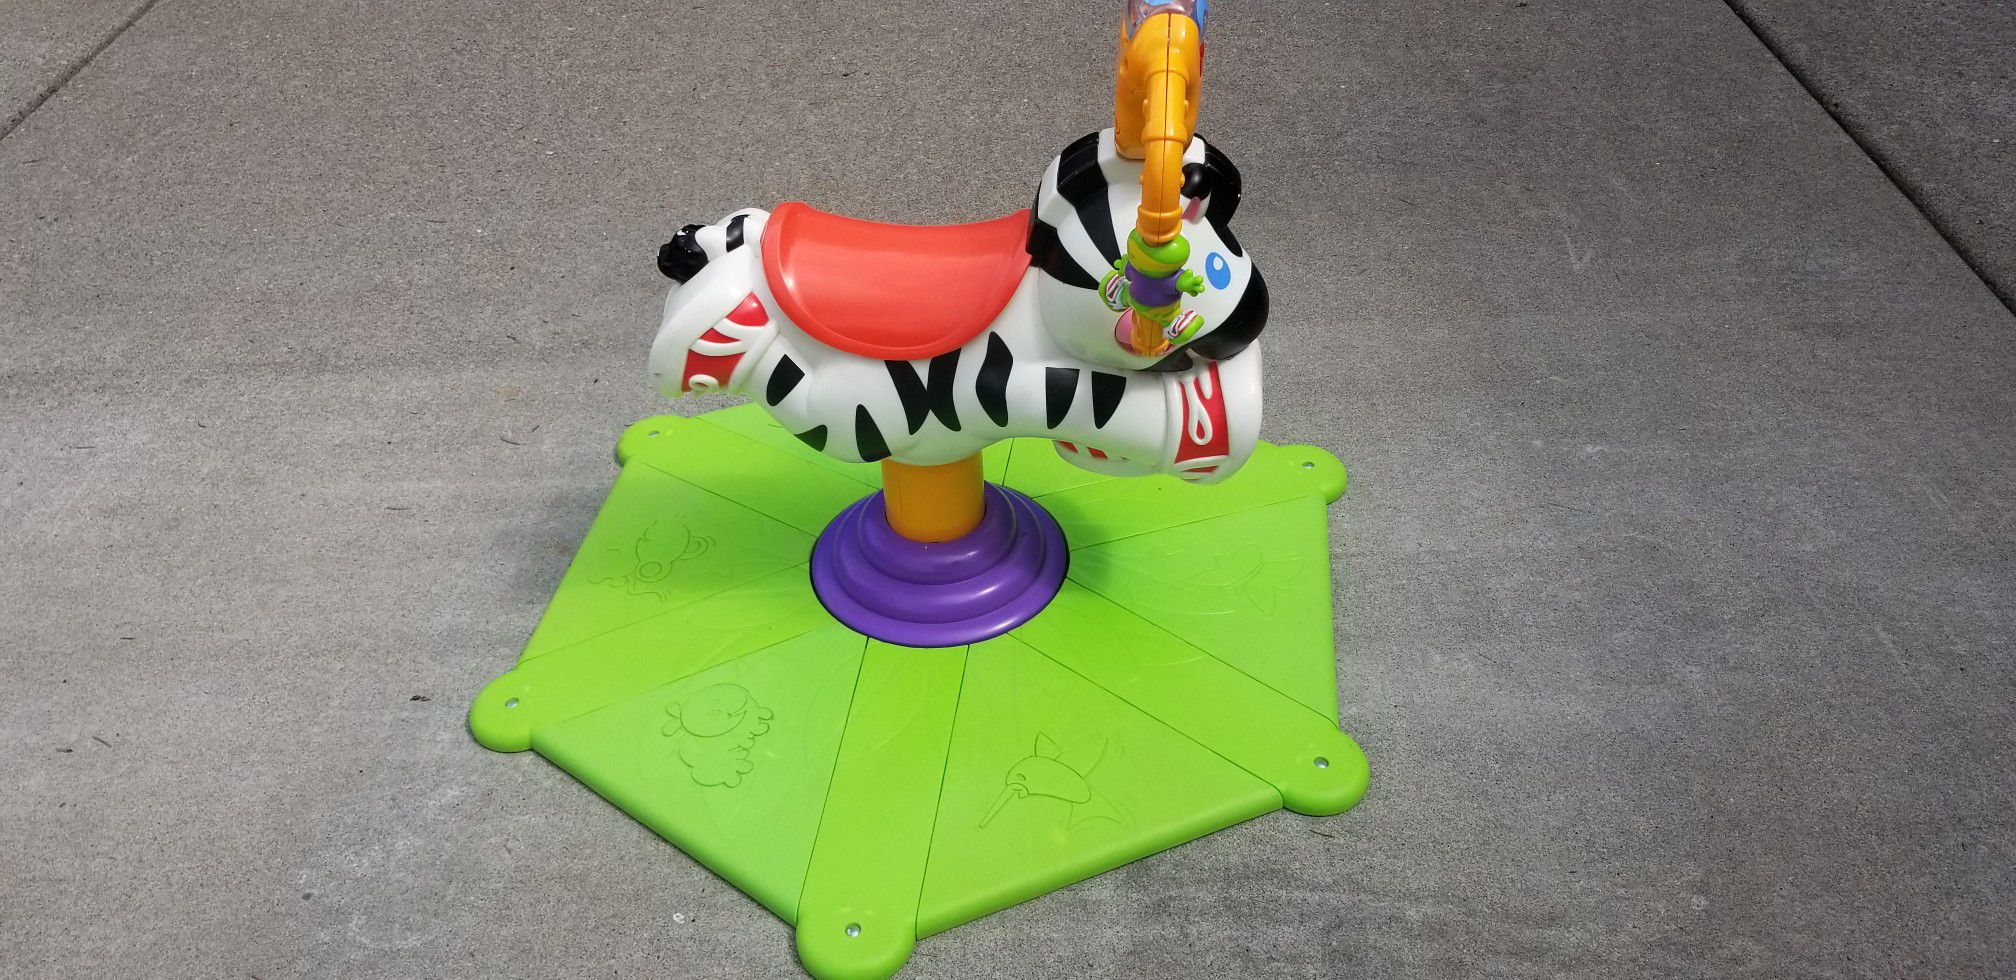 Zebra Jumper Toy For Kids (very fun)